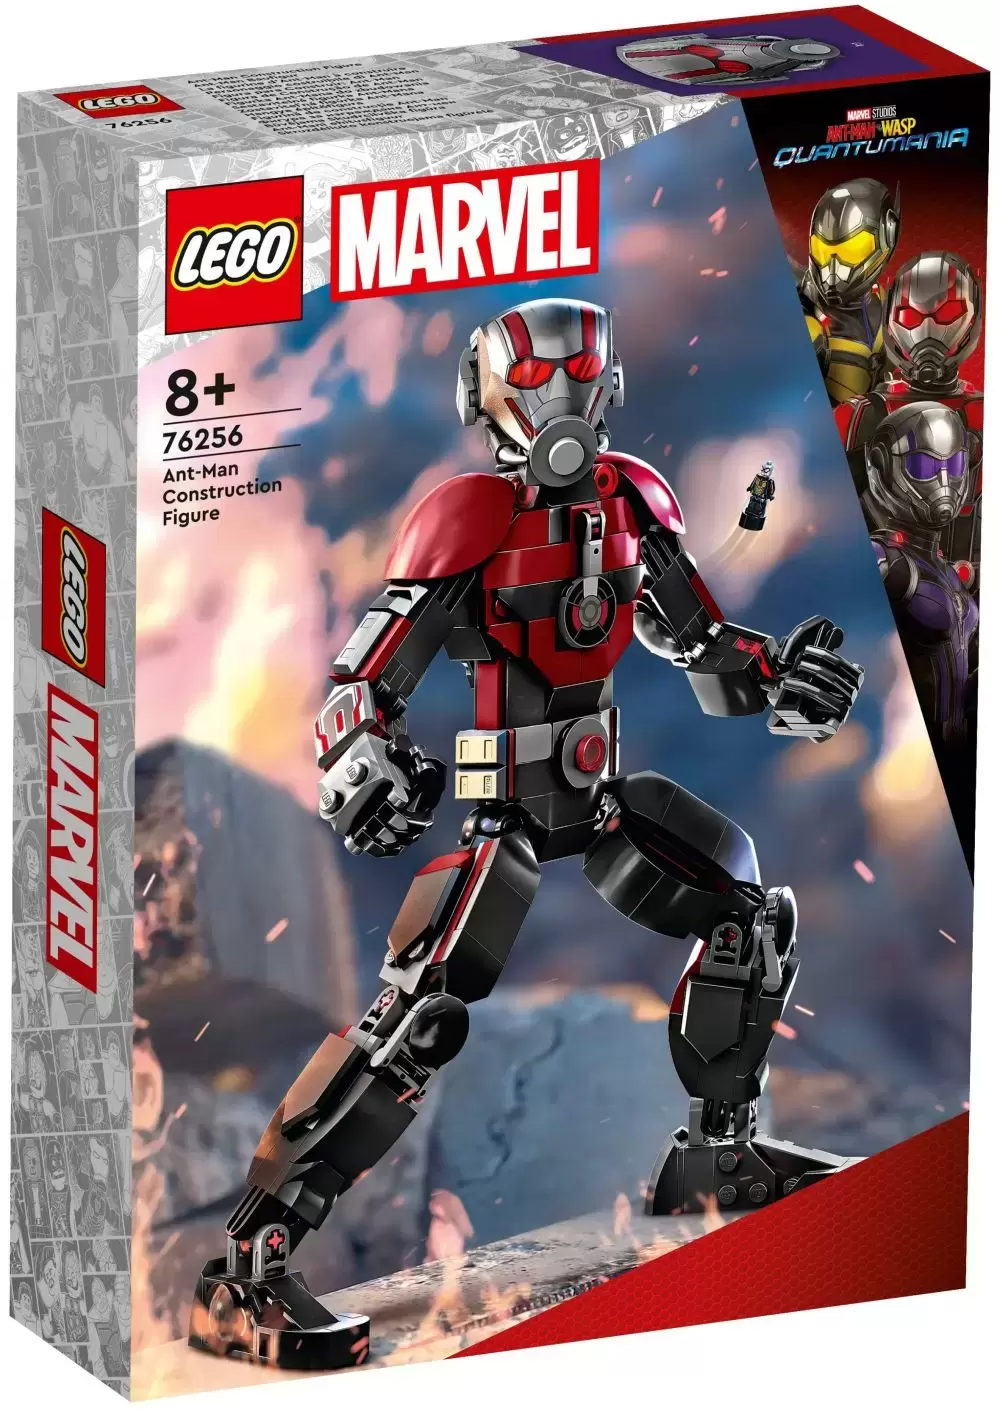 LEGO MARVEL Super Heroes - Ant-Man Construction Figure